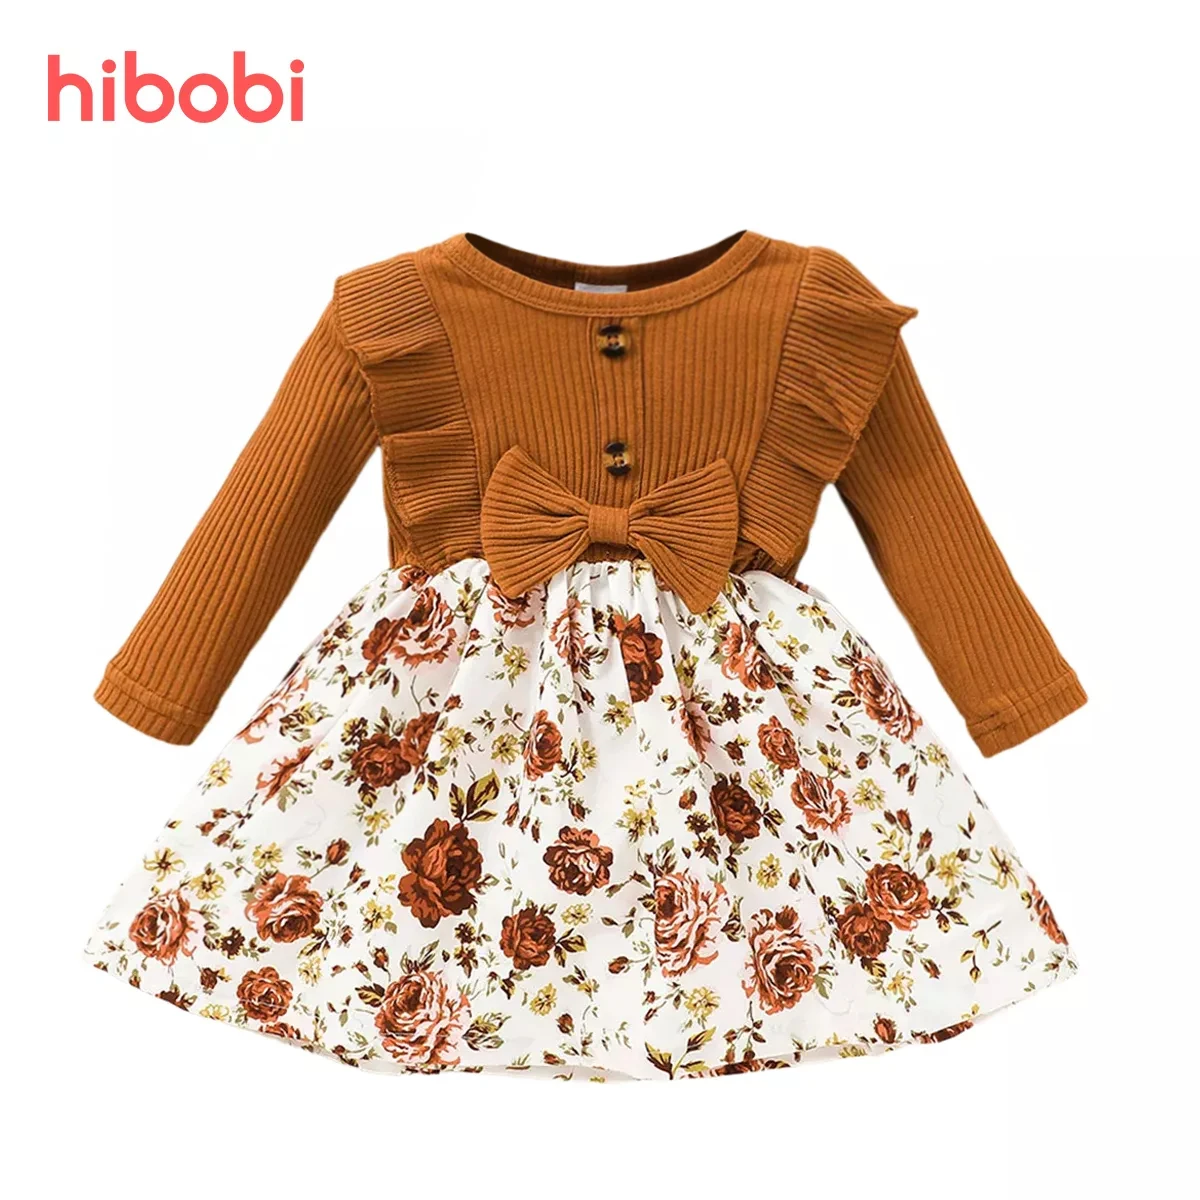 hibobi Baby Girl Dress Knee Length Dresses  Bow Tie Cotton Long Sleeve  Floral Printed  Dress For Infant Babi Clothes